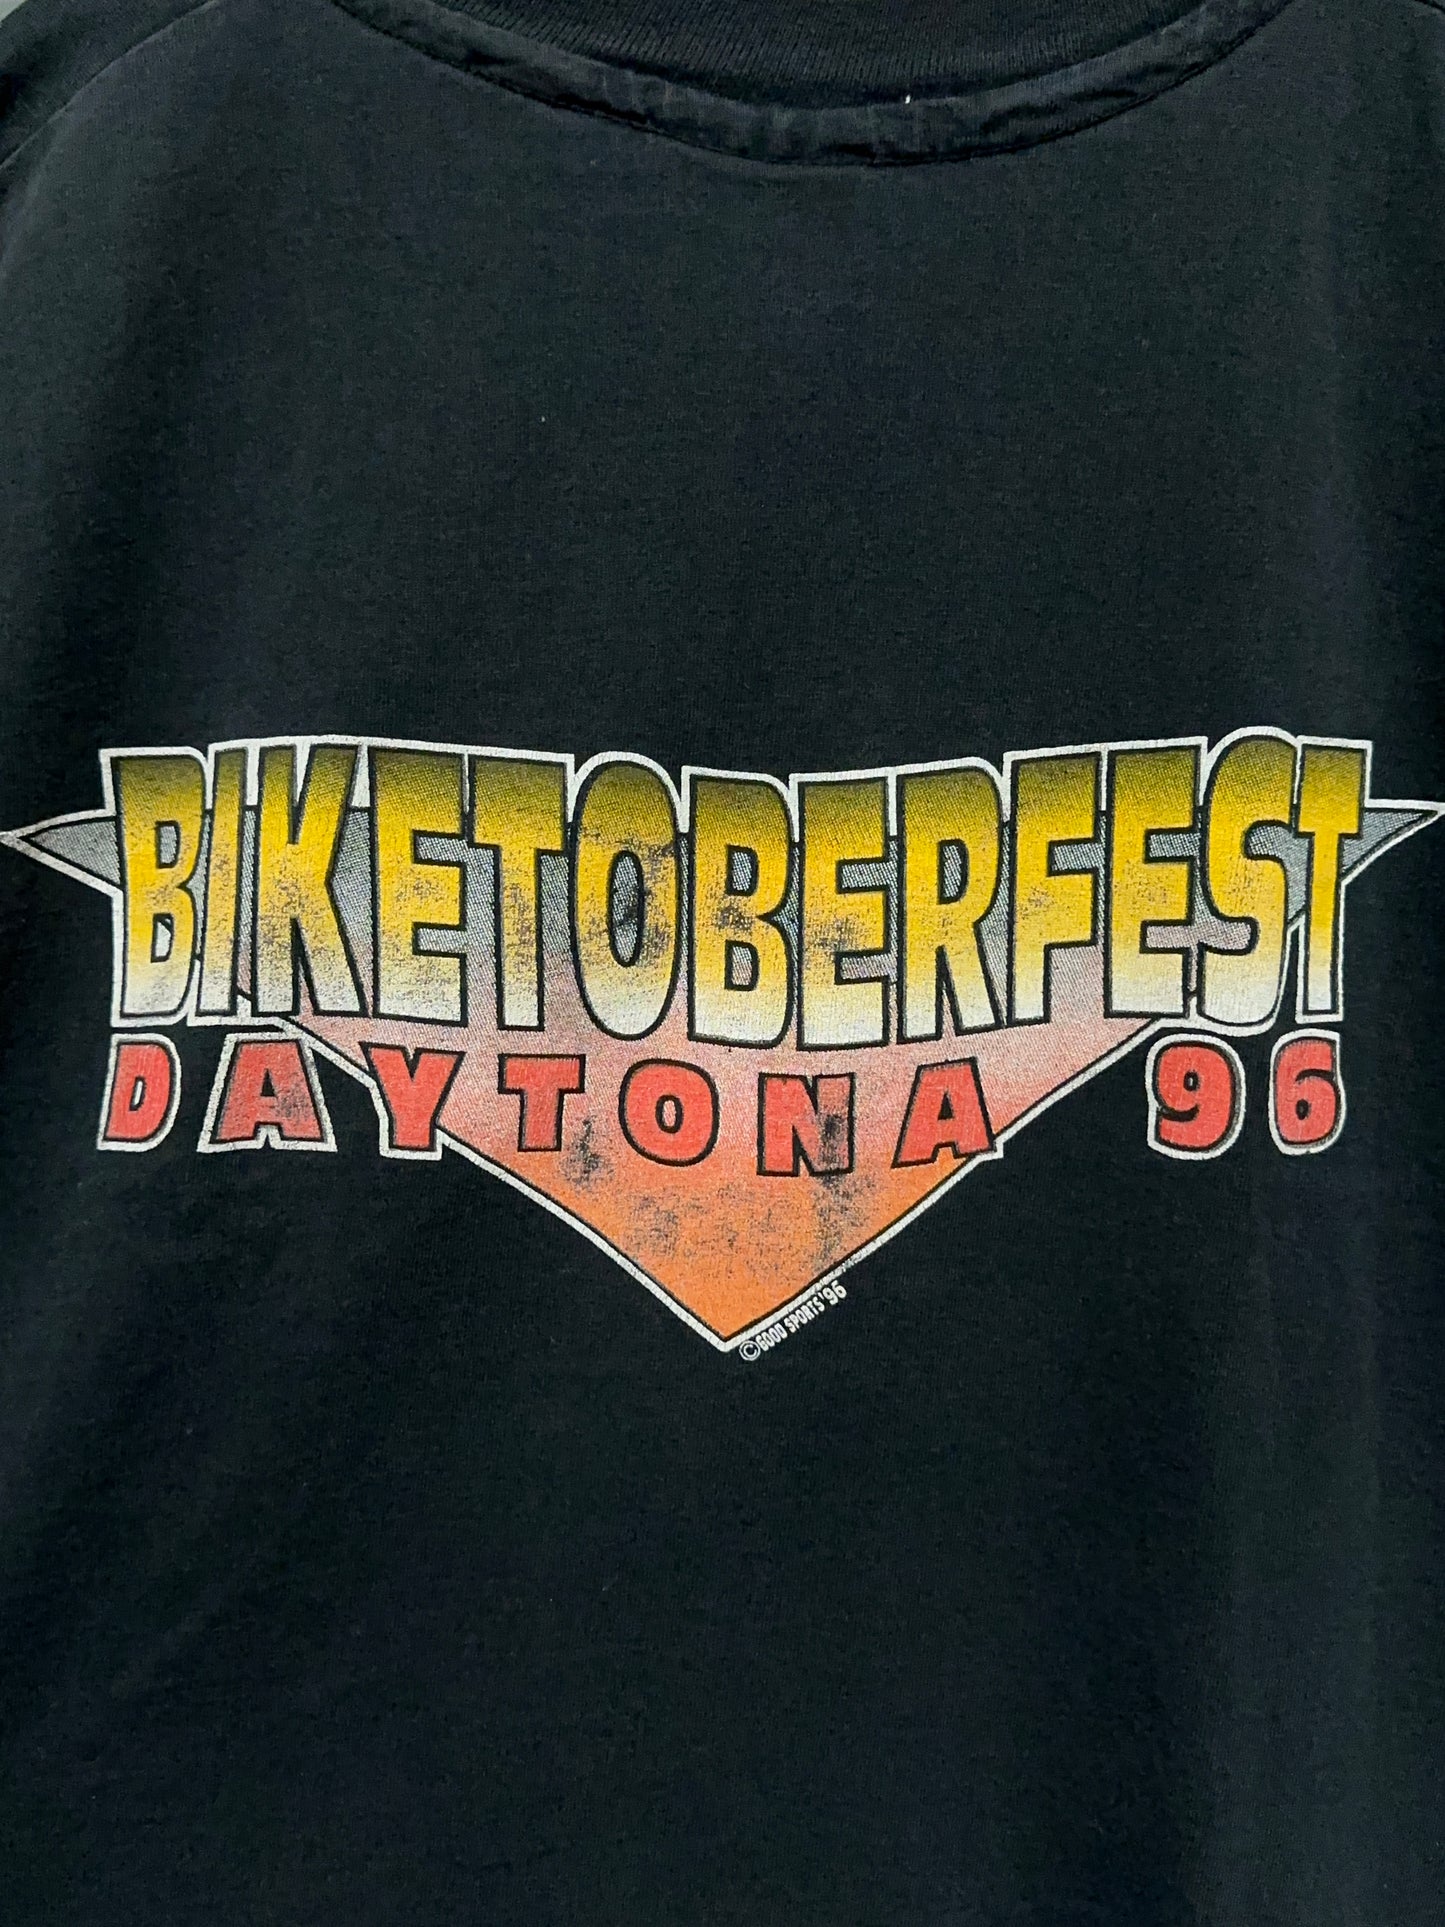 Vintage 90s Daytona Beach Biketoberfest Graphic Tee XL